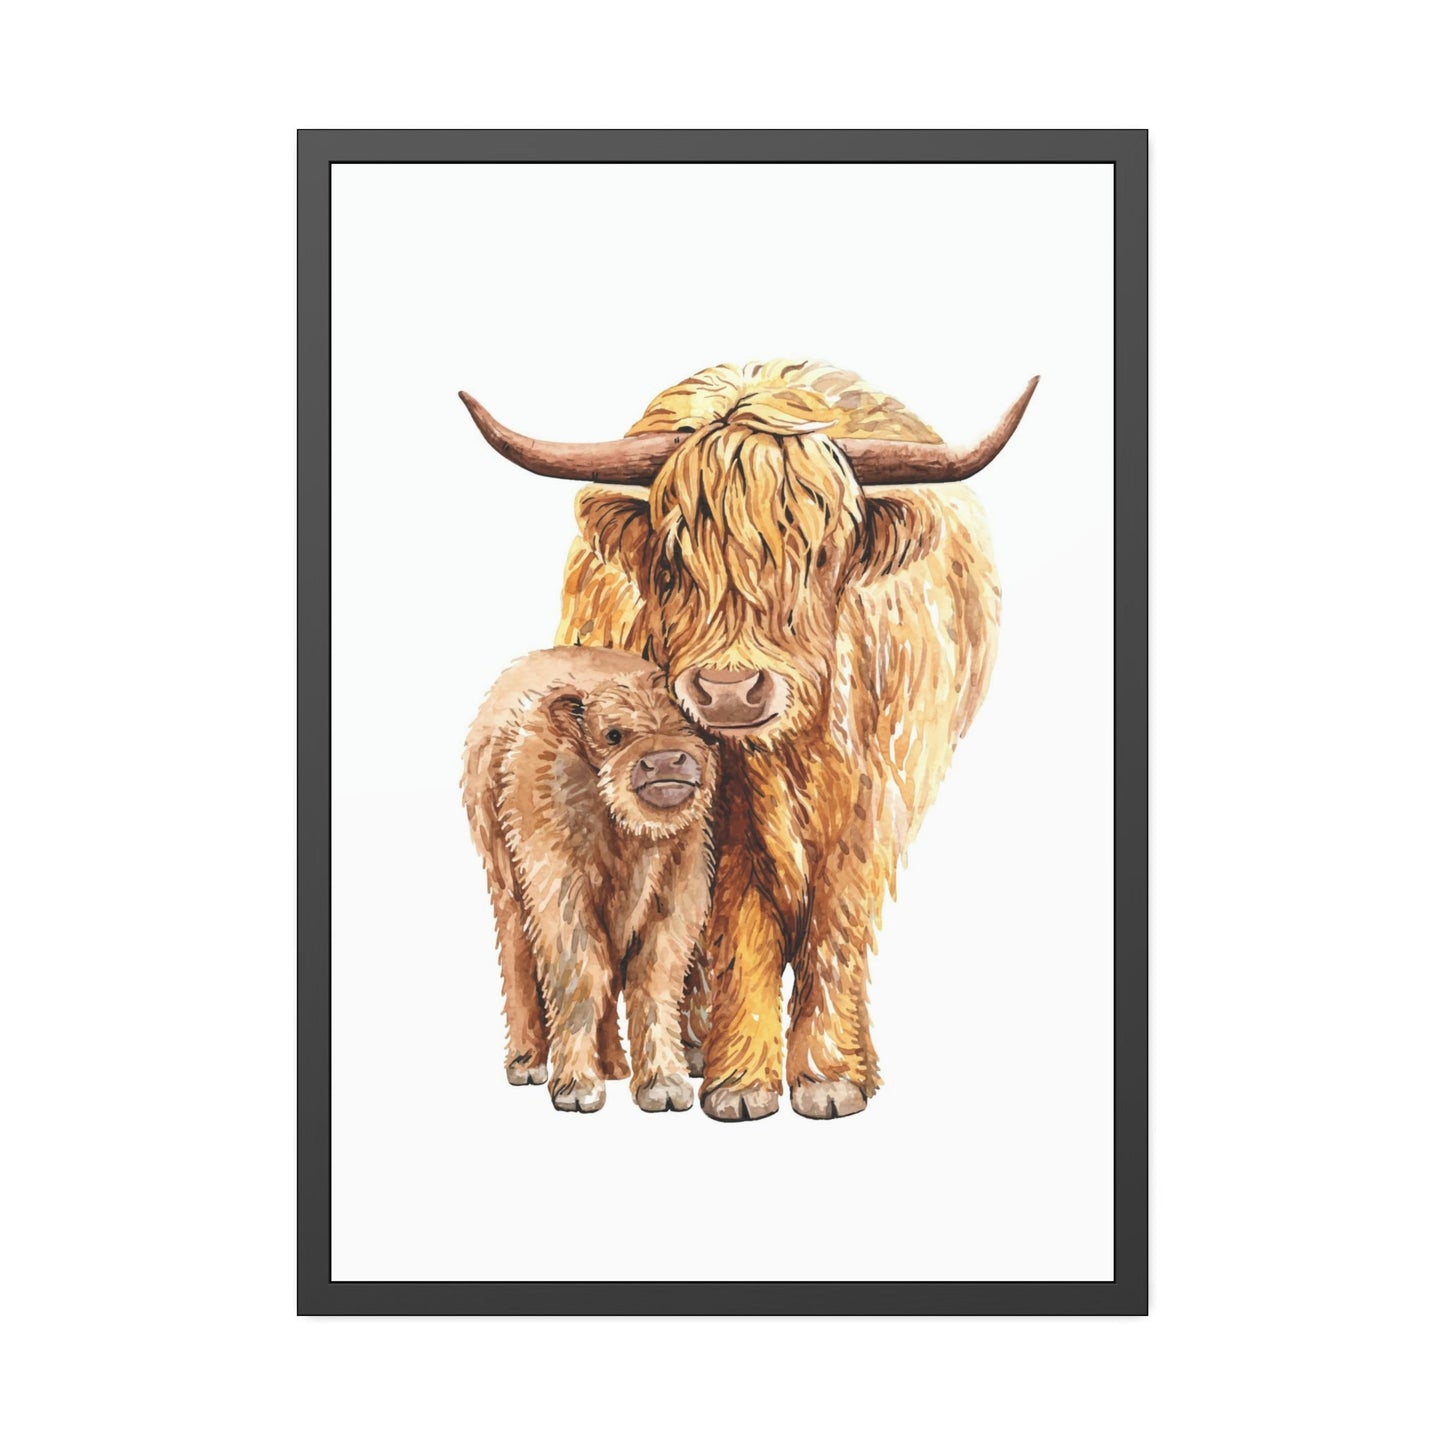 Maternal Love: Heartwarming Wall Art Depicting a Cow Mother and Calf